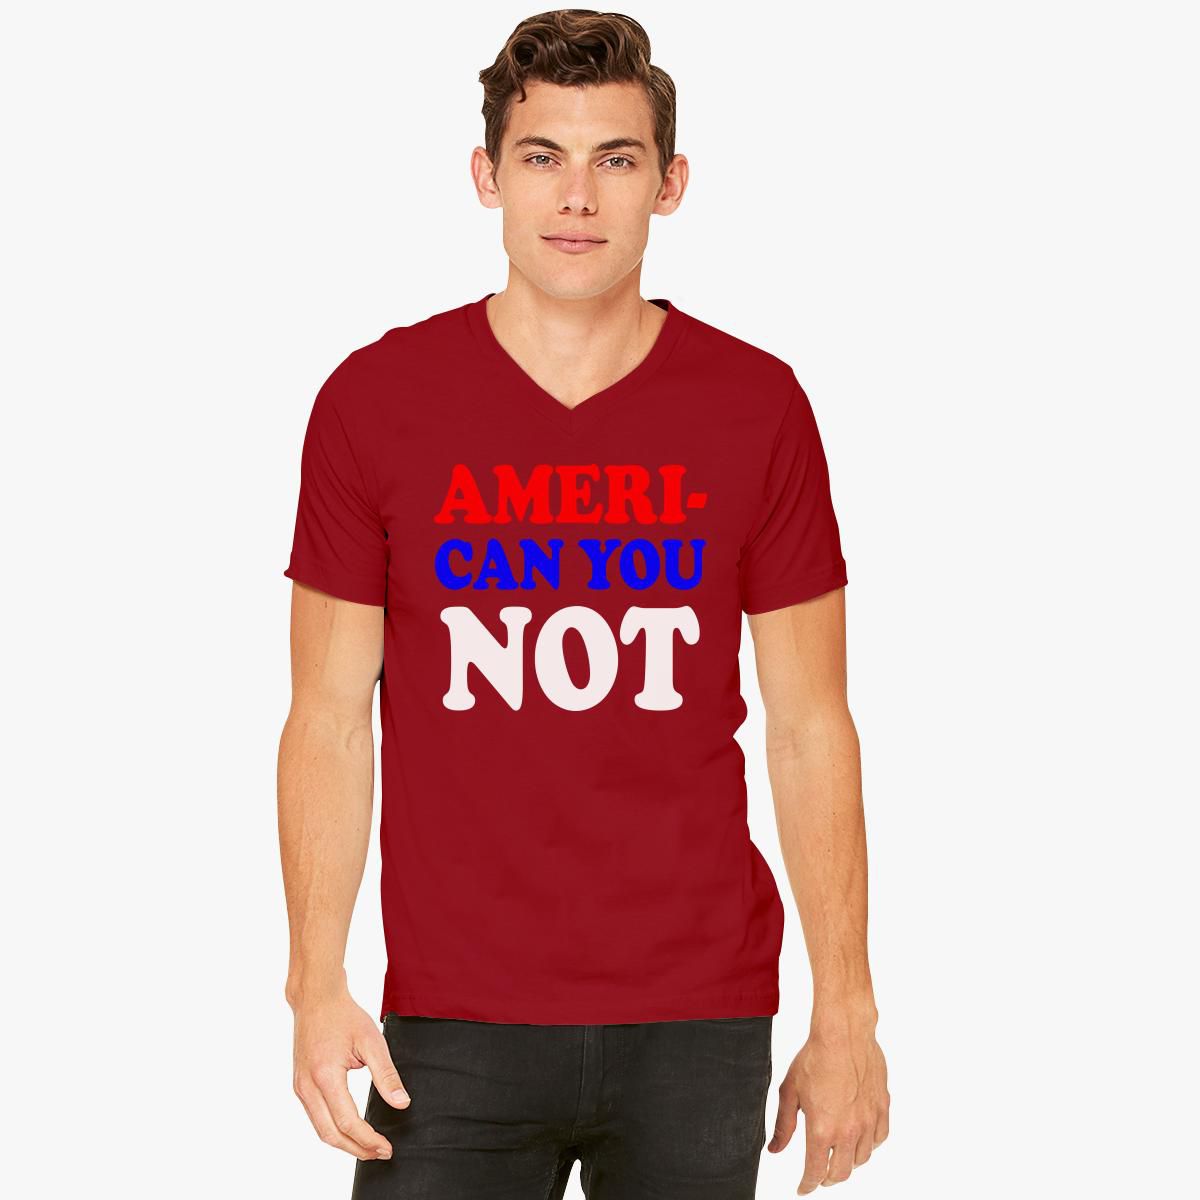 Ameri-can You Not V-Neck T-shirt - Customon